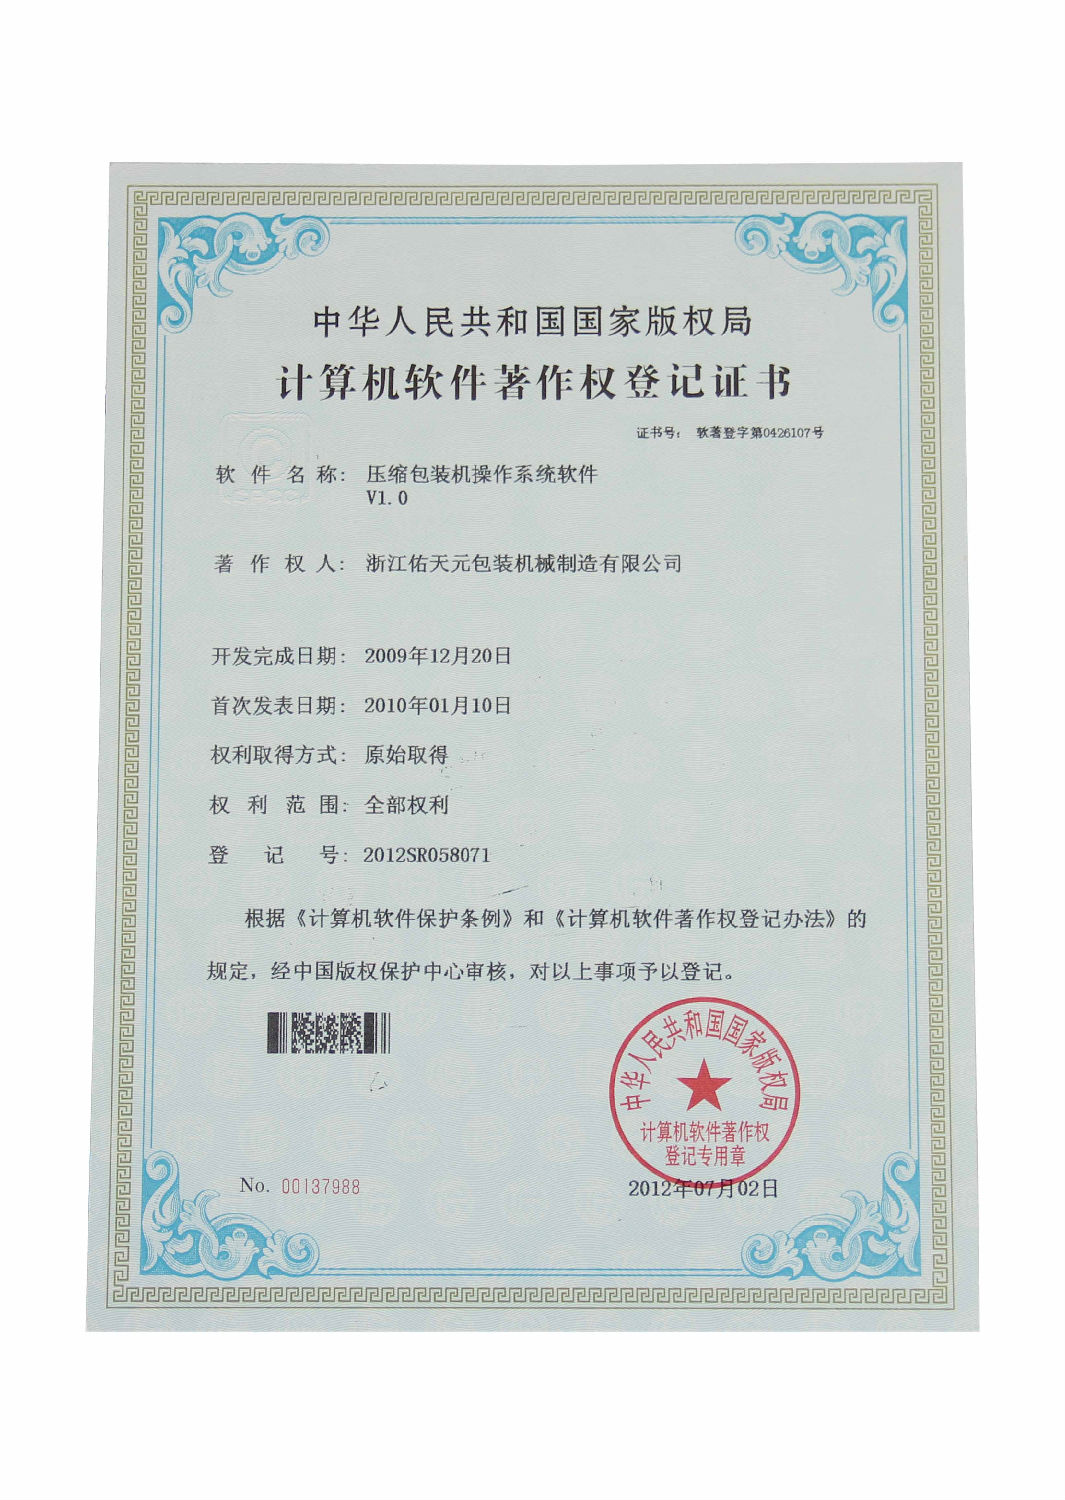 Utien ISO9001 certification.jpg